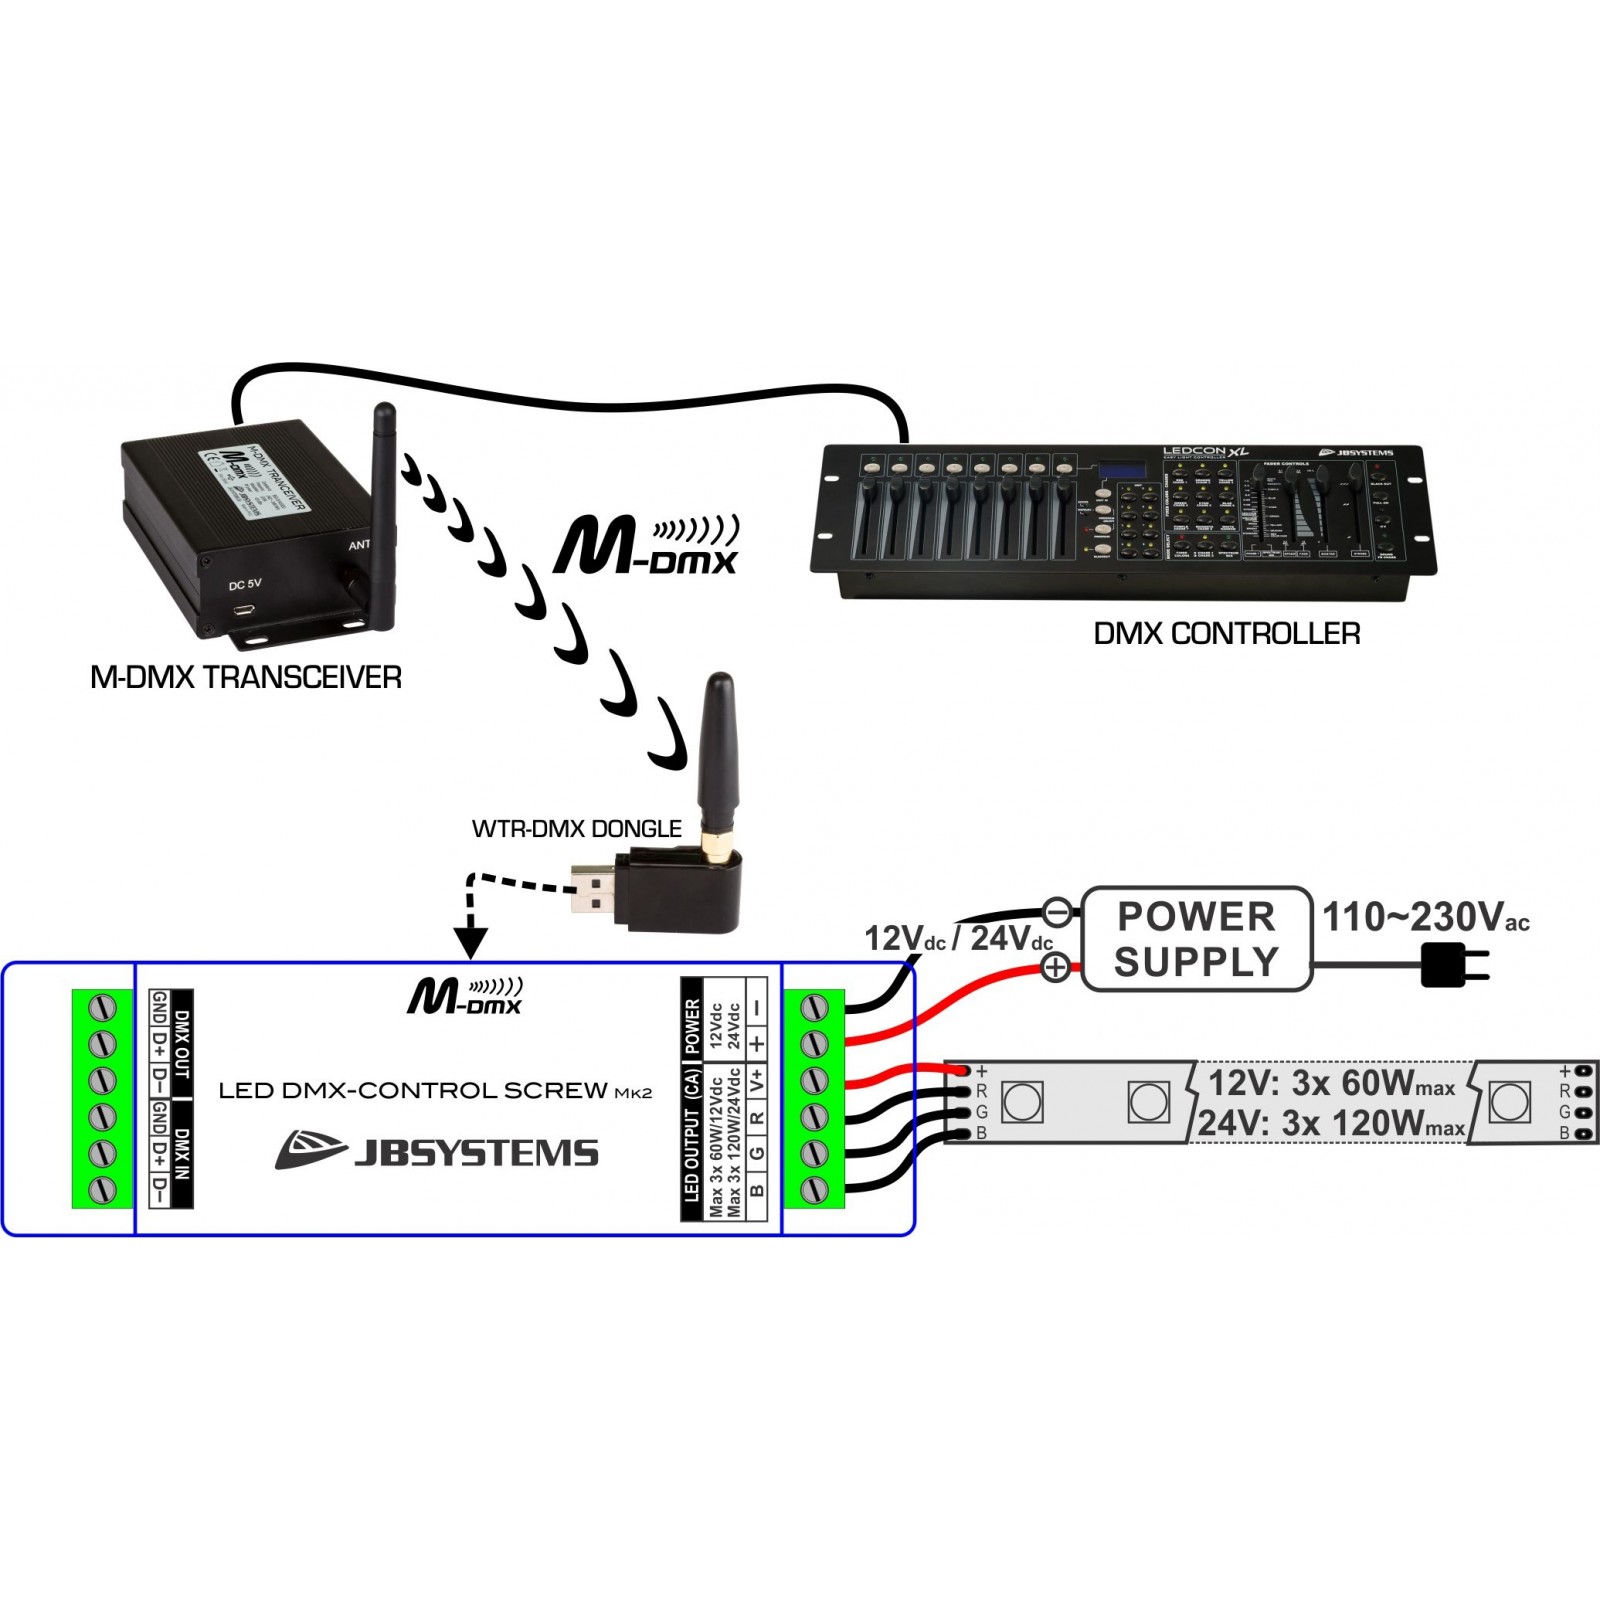 JB Systems DMX-CONTROL SCREW Mk2